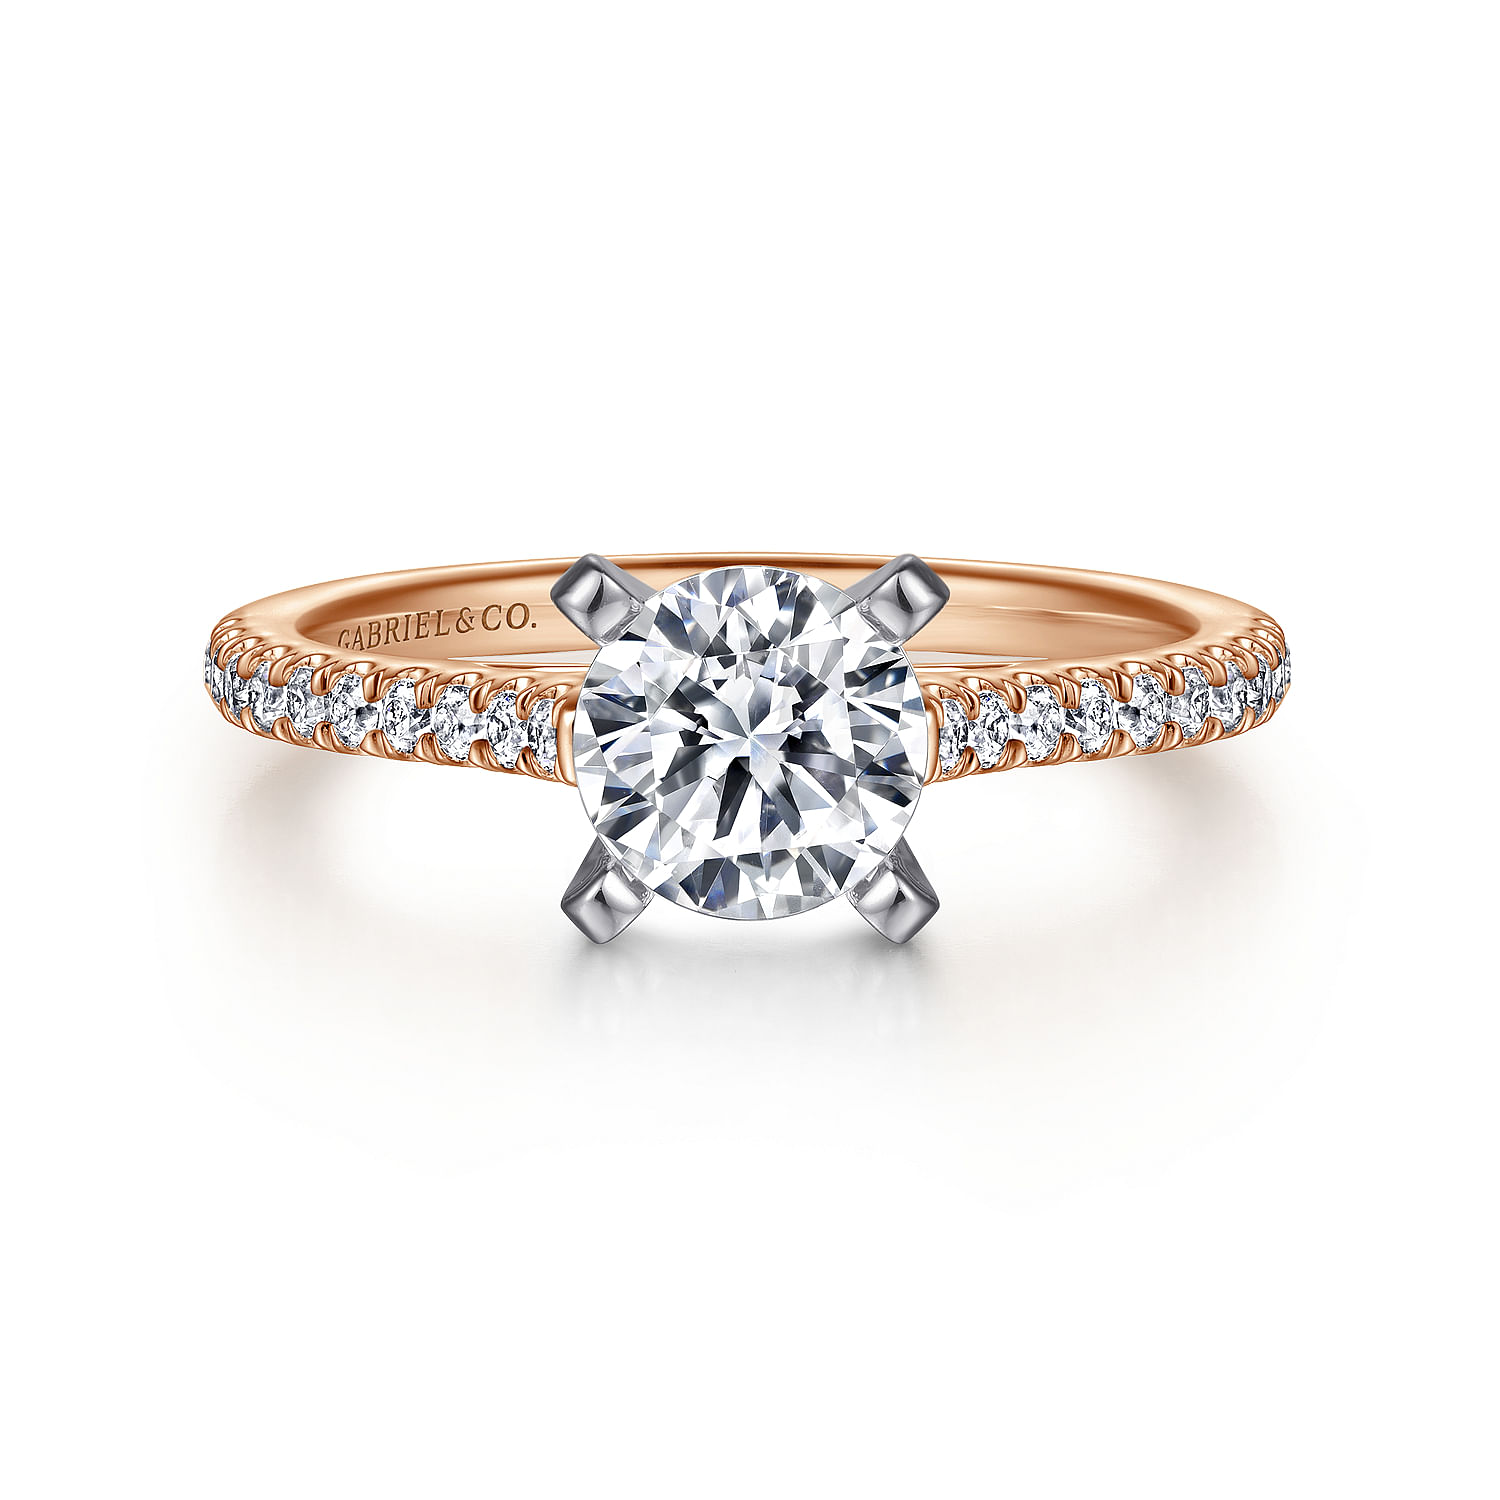 Joanna---14K-White-Rose-Gold-Round-Diamond-Engagement-Ring1